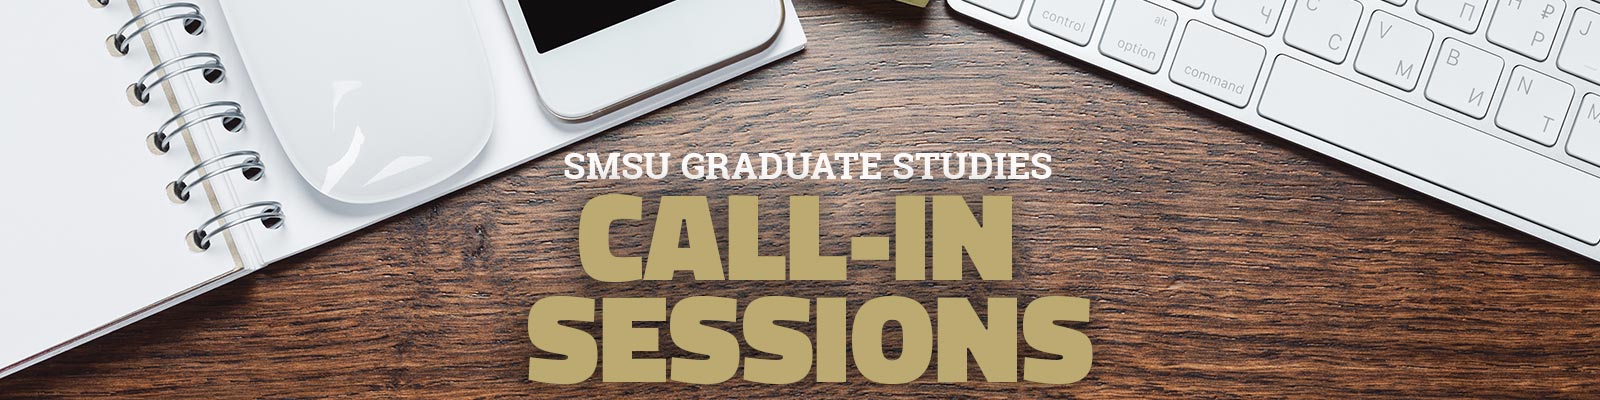 grad call in session header